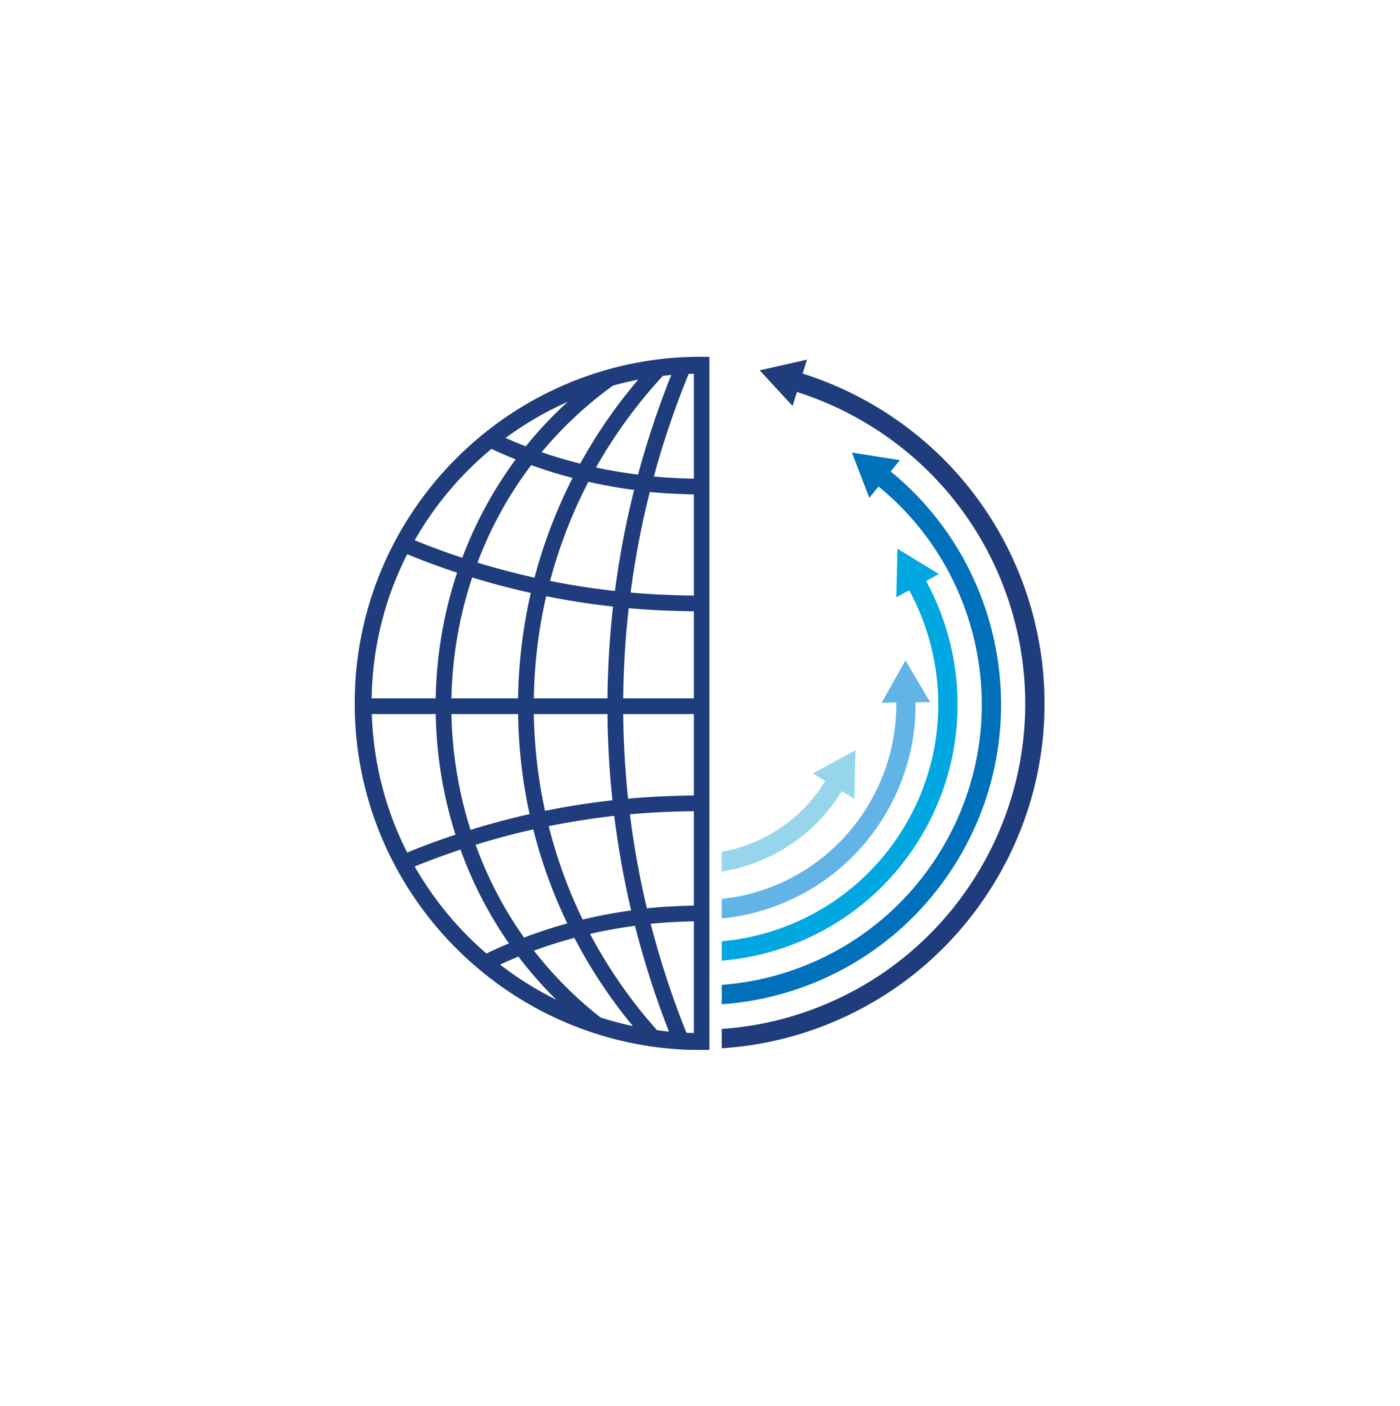 Half Globe Logo - Customer Advisory Board by Ryan Keller at Coroflot.com